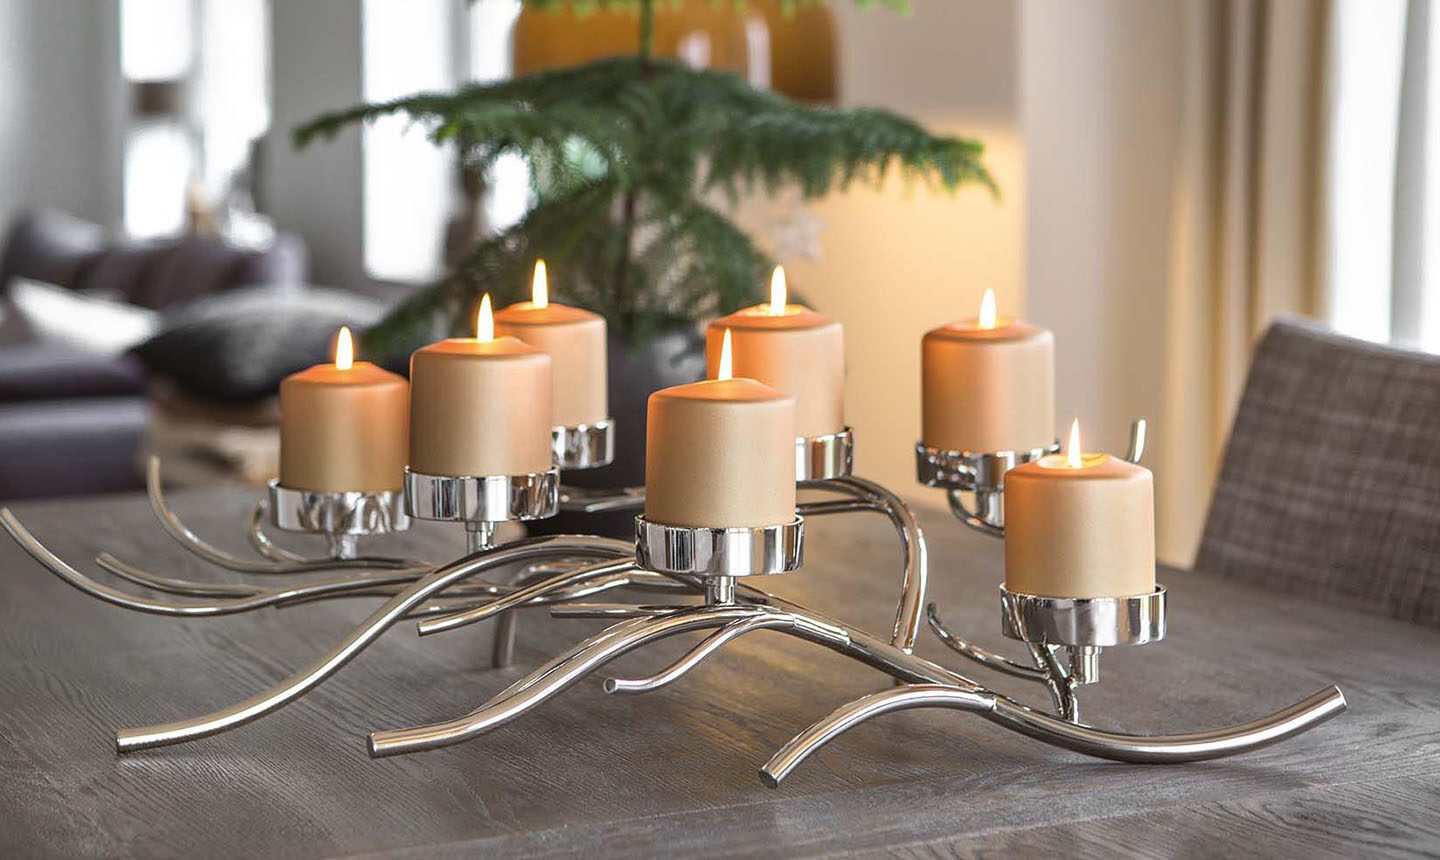 luxury table centerpieces - Cadeaux Christmas Interior Decorating - Dallas TX